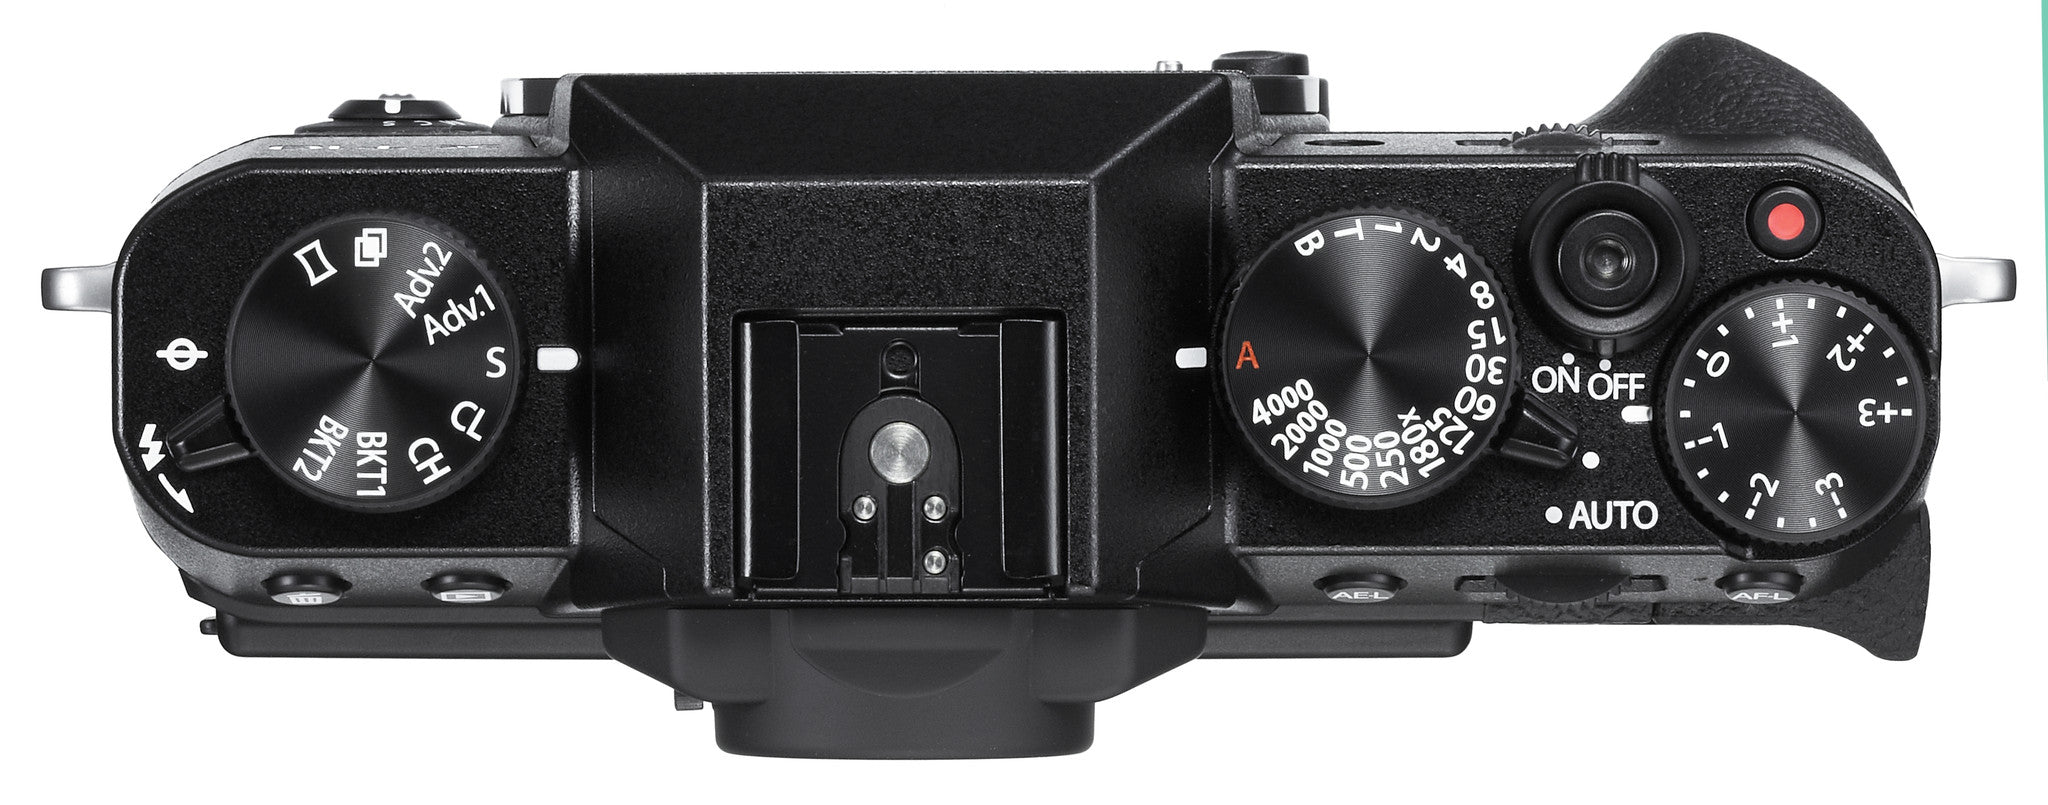 Fujifilm X-T10 Kit w/XC 16-50mm & XC 50-230mm Lens (Black), camera mirrorless cameras, Fujifilm - Pictureline  - 5